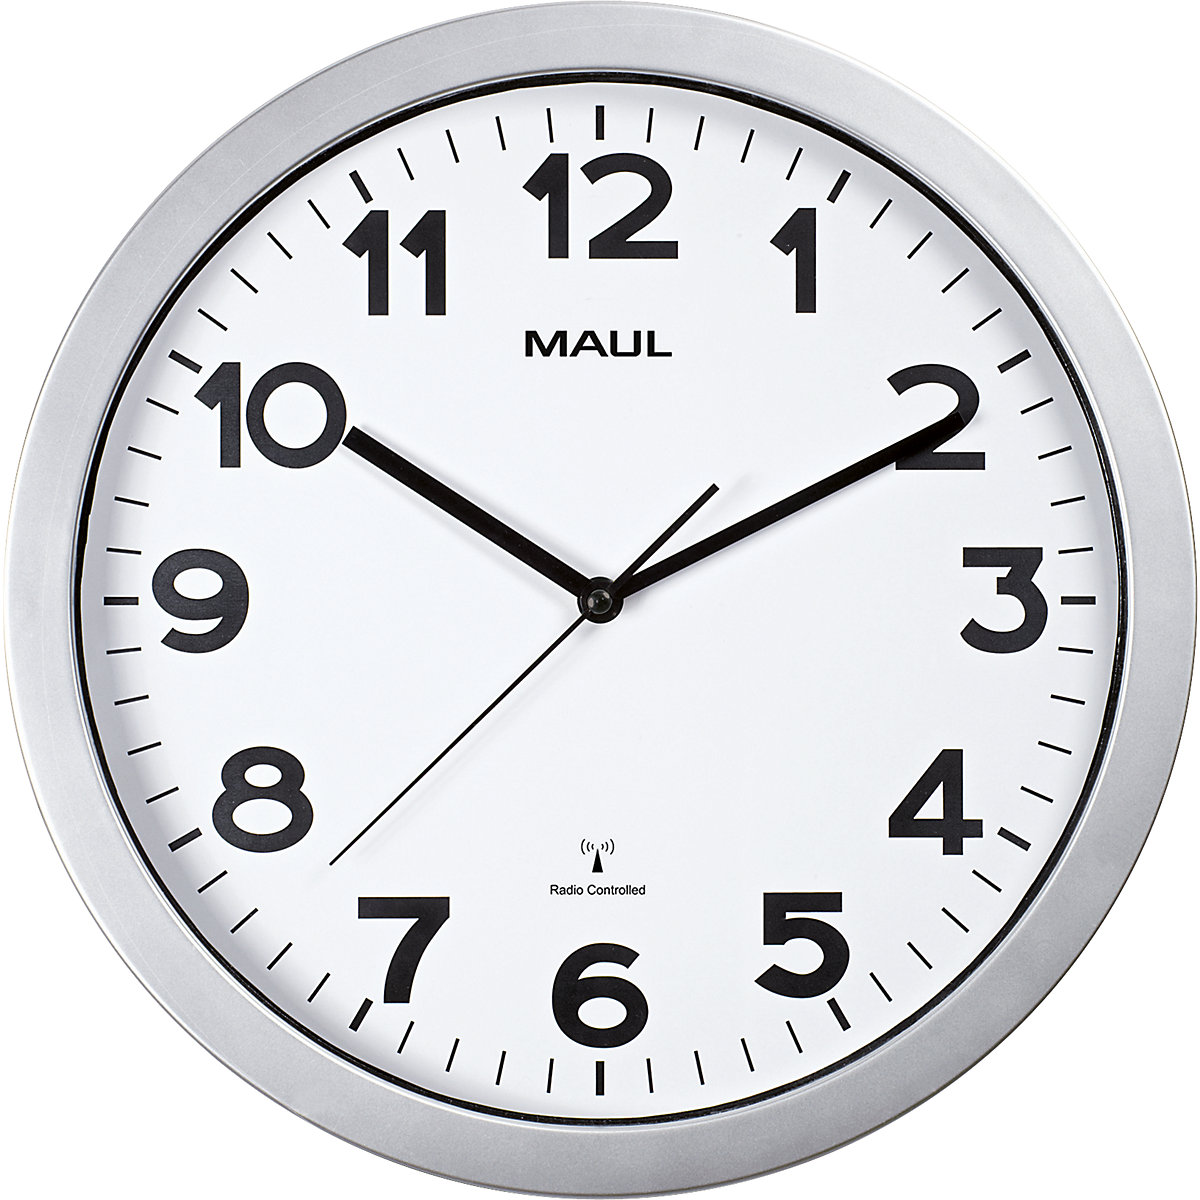 MAULstep wall clock – MAUL